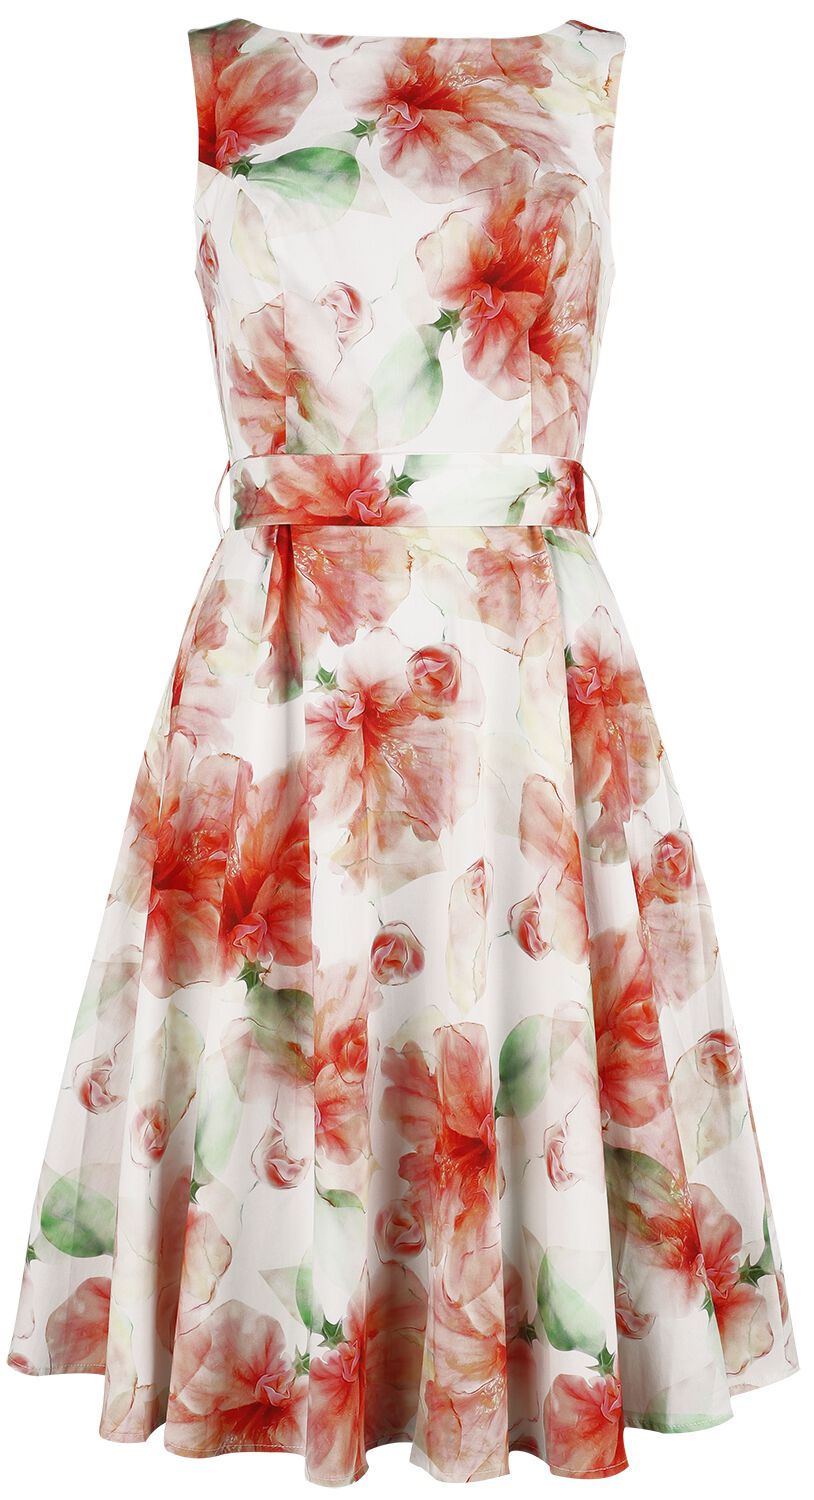 H&R London - Rockabilly Kleid knielang - Ayla Floral Swing Dress - XS bis 4XL - für Damen - Größe M - multicolor